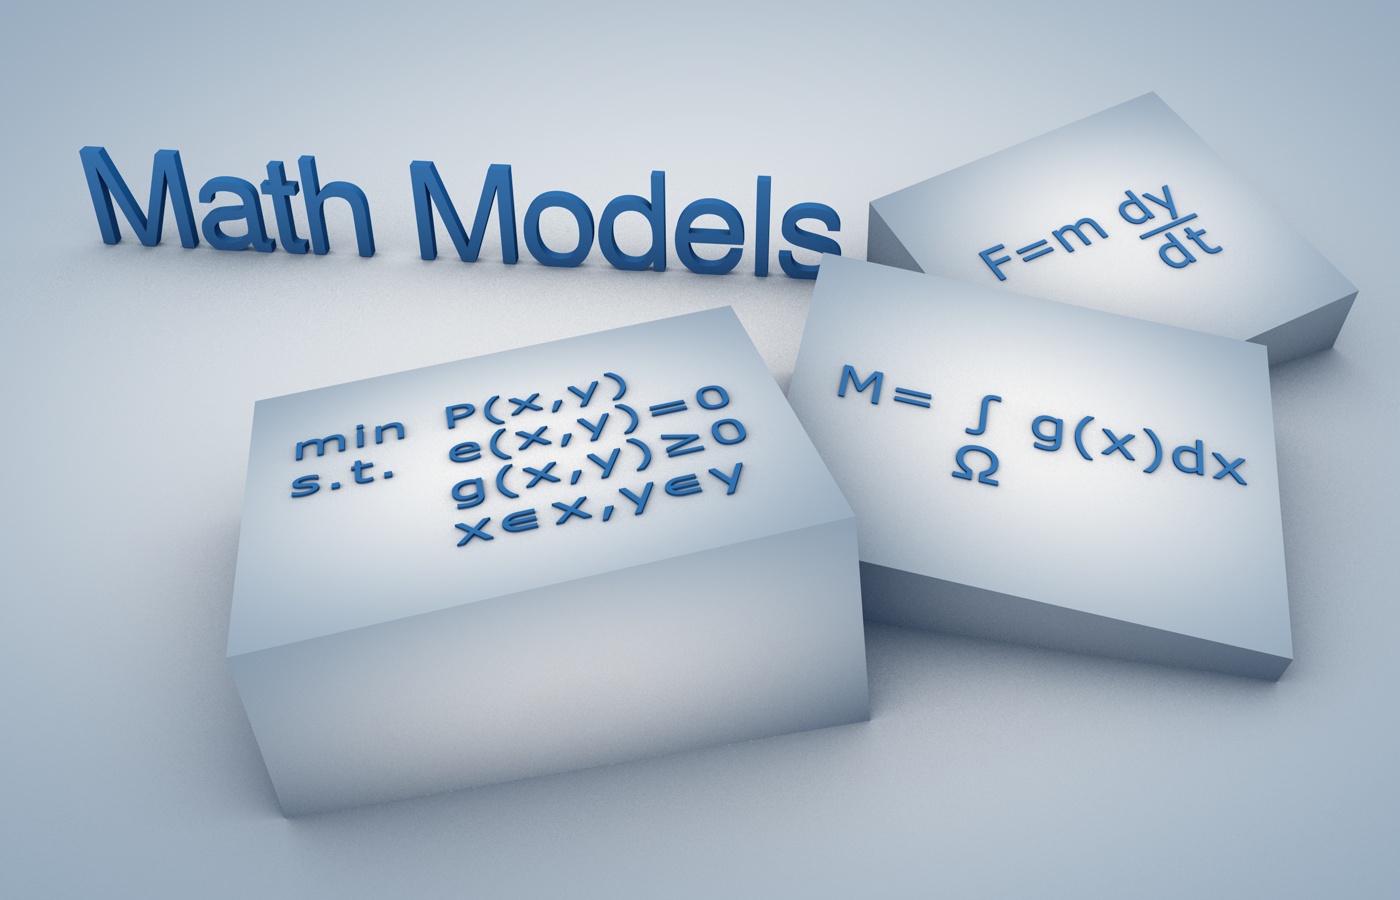 Illustration of mathematical models